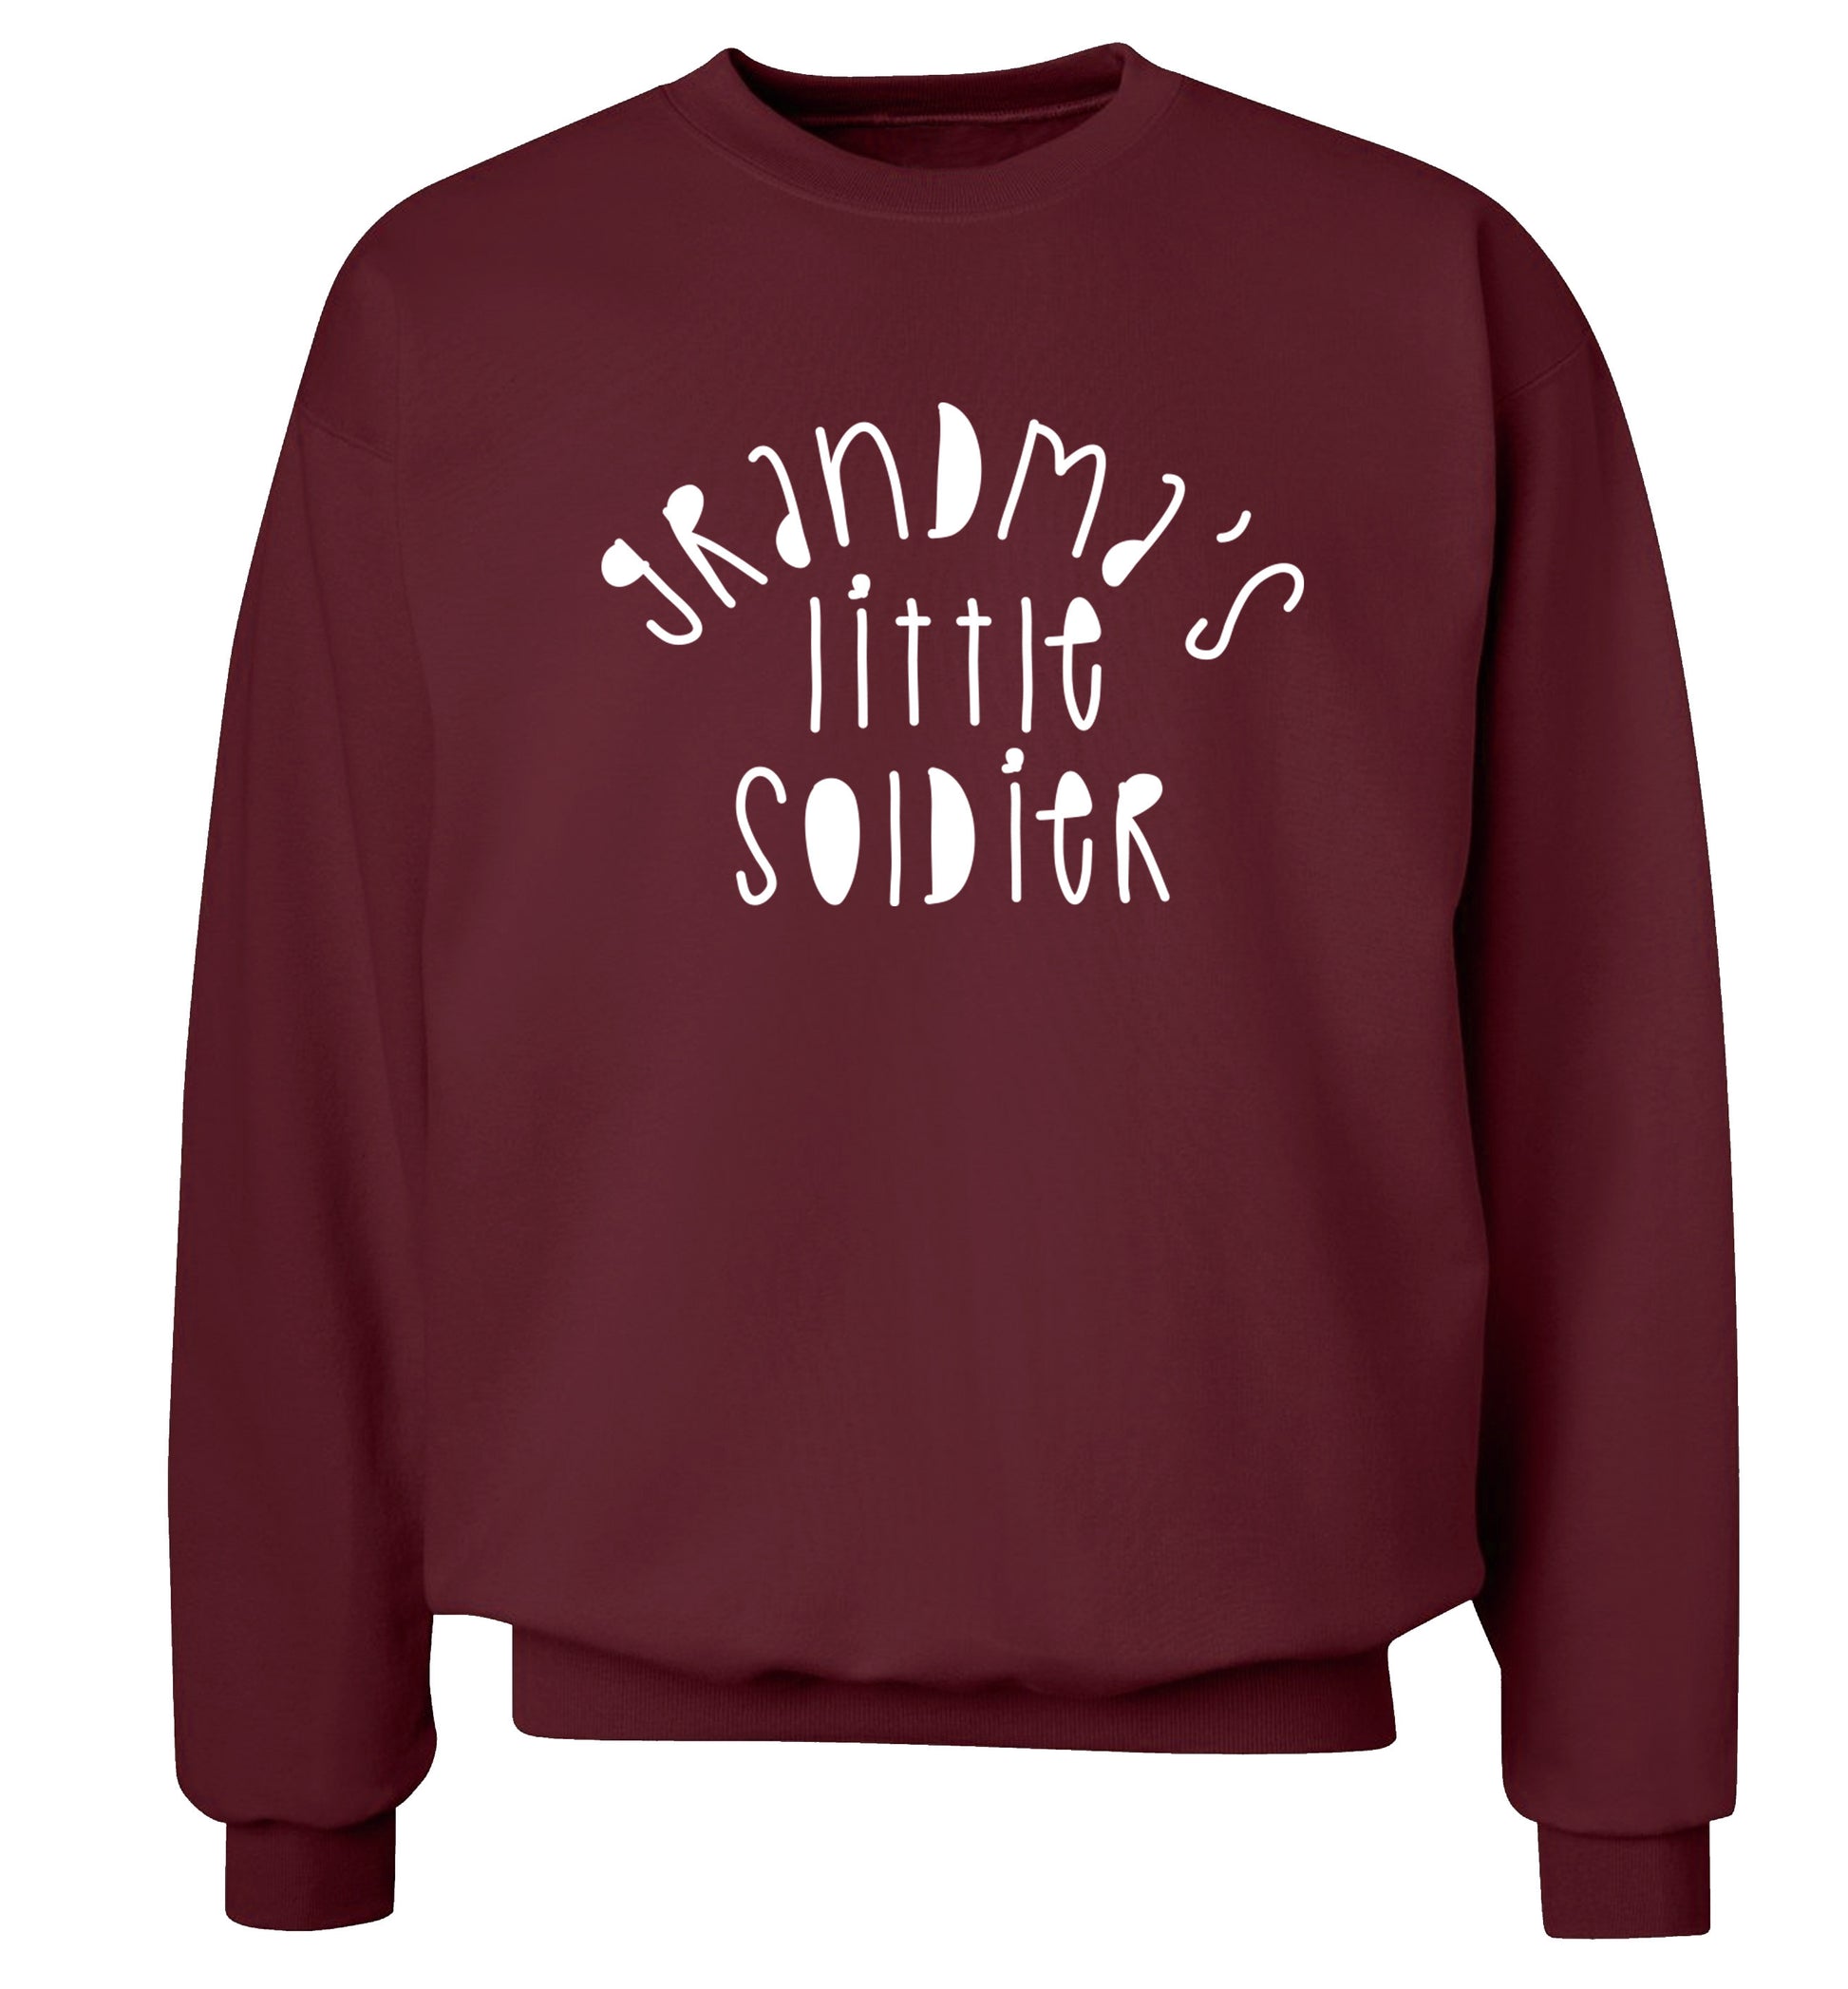 Grandma's little soldier Adult's unisex maroon Sweater 2XL